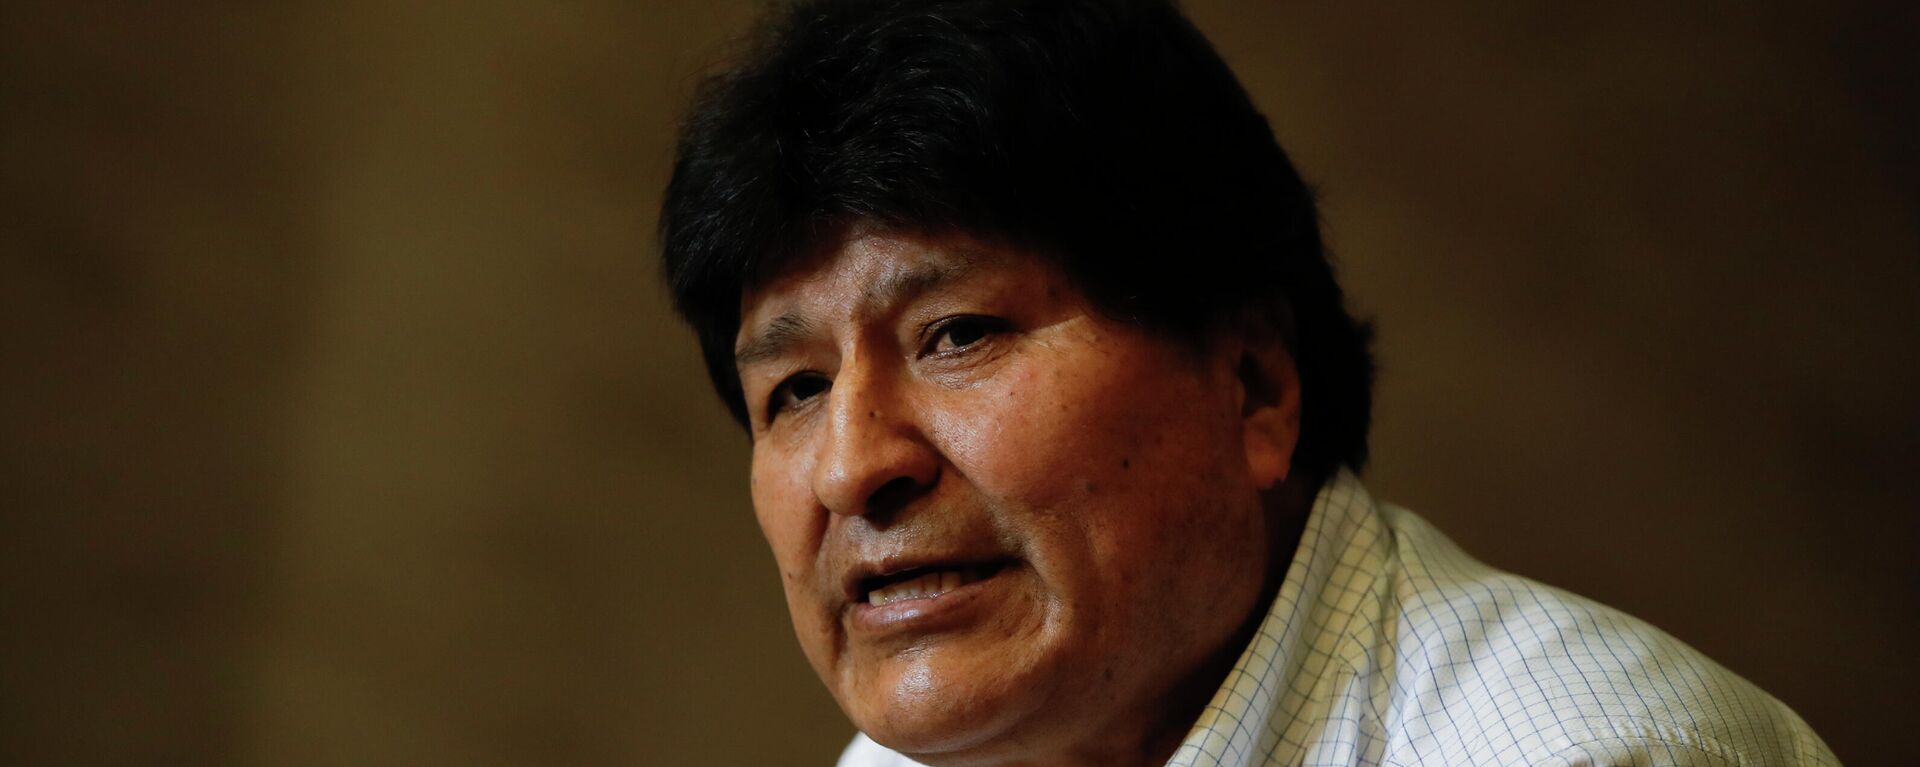 El expresidente socialista boliviano Evo Morales (2006-2019) - Sputnik Mundo, 1920, 27.10.2022